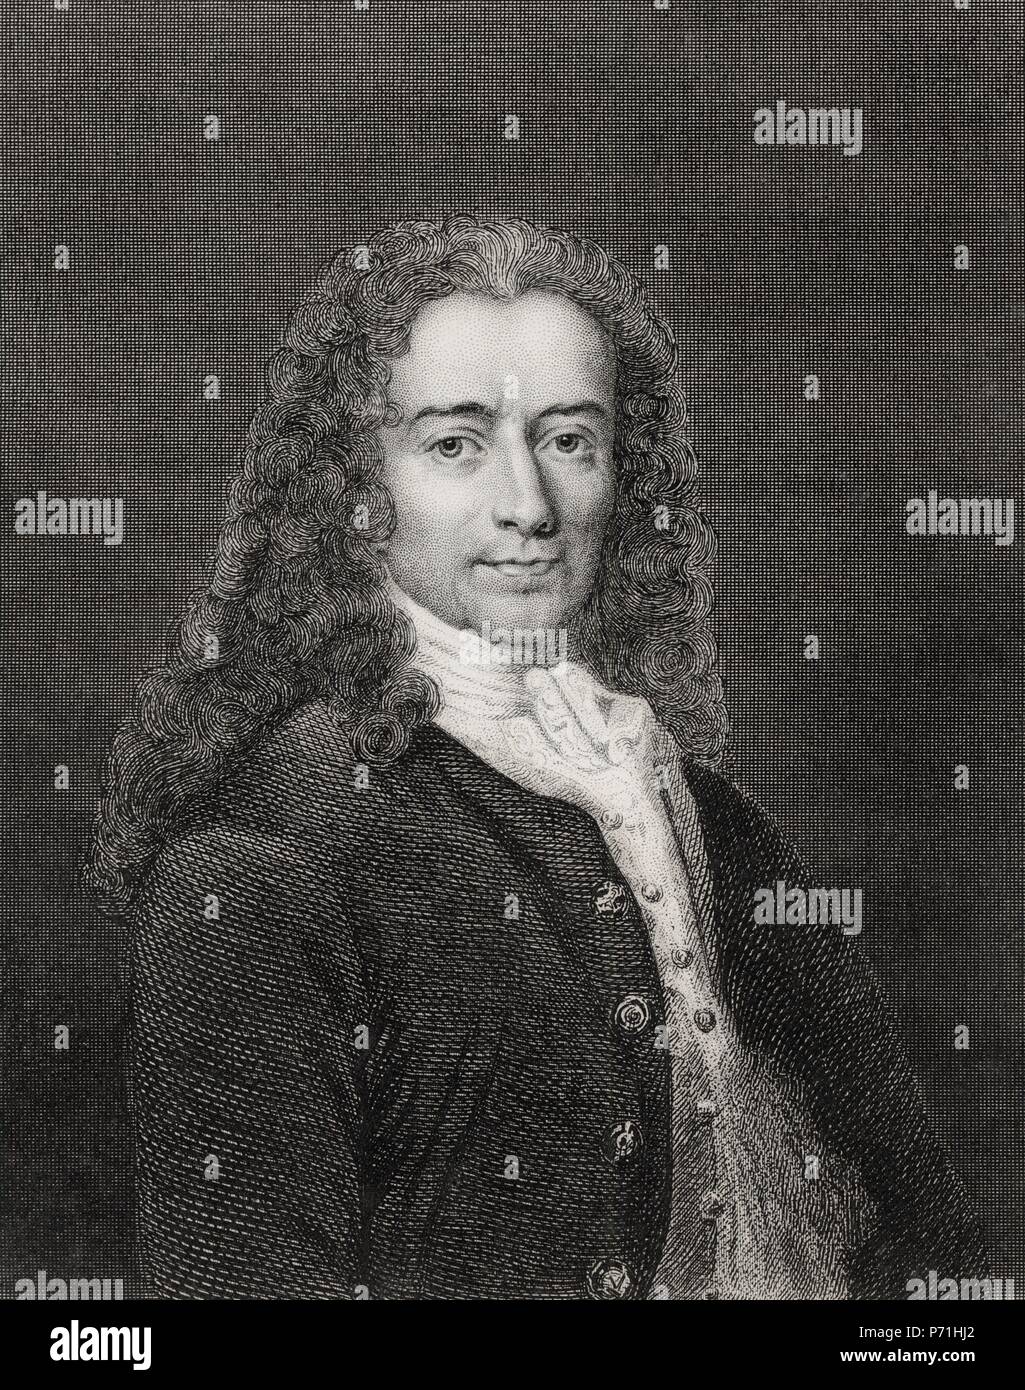 François Marie Aronet (1694-1778), escritor, historiador, filósofo y abogado francés conocido como Voltaire. Grabado de 1866. Stock Photo